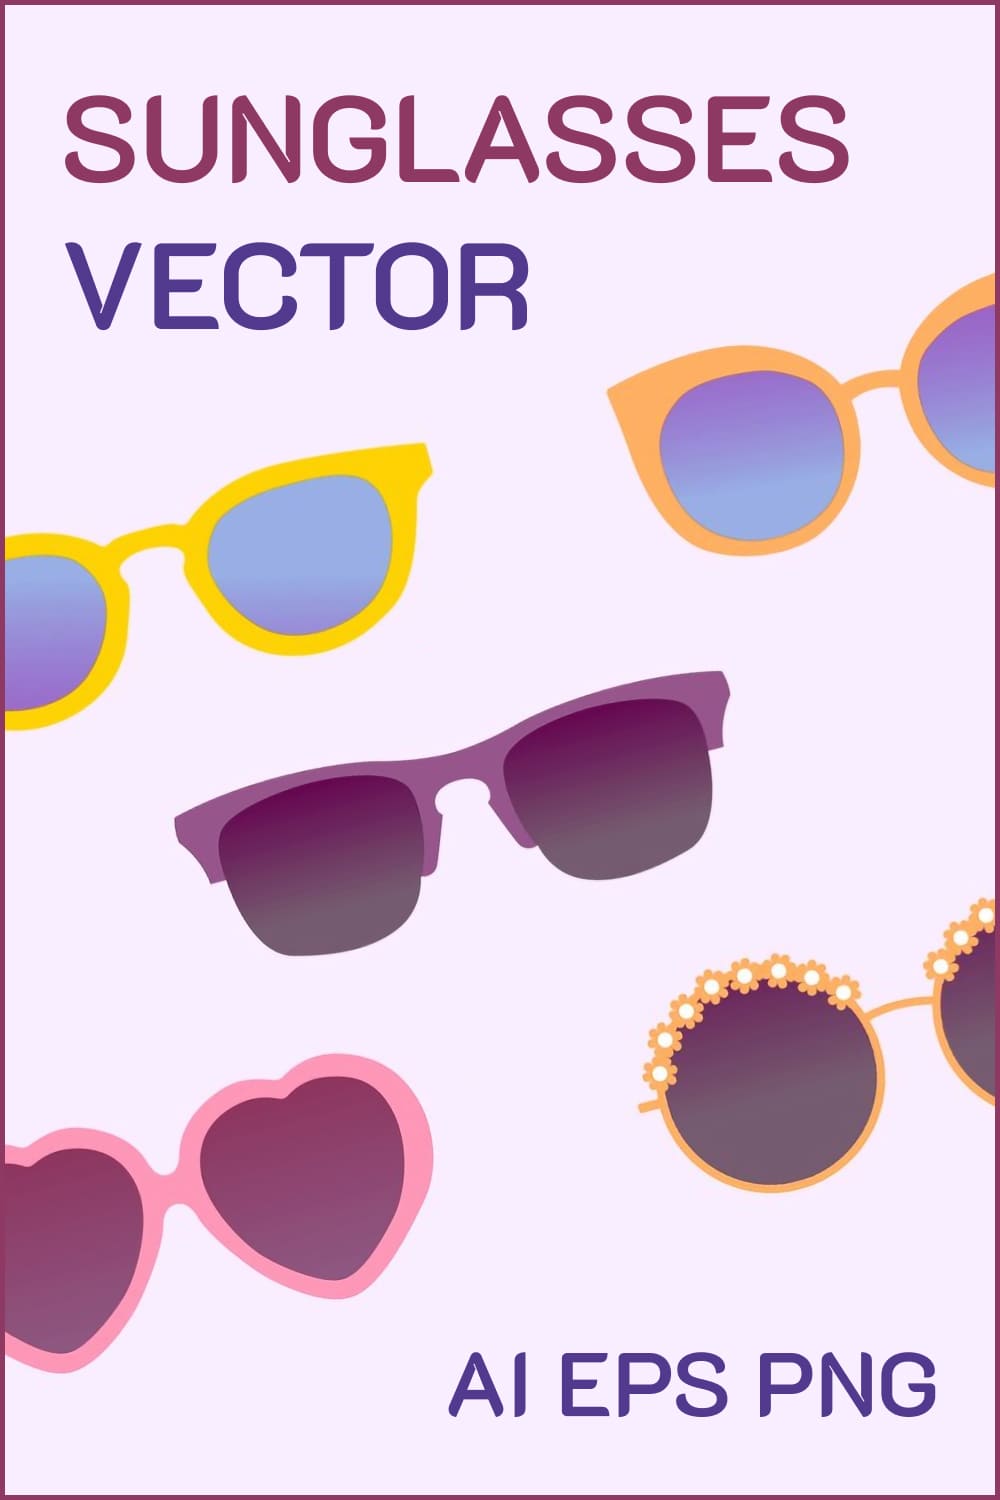 Vector sunglasses pinterest image.